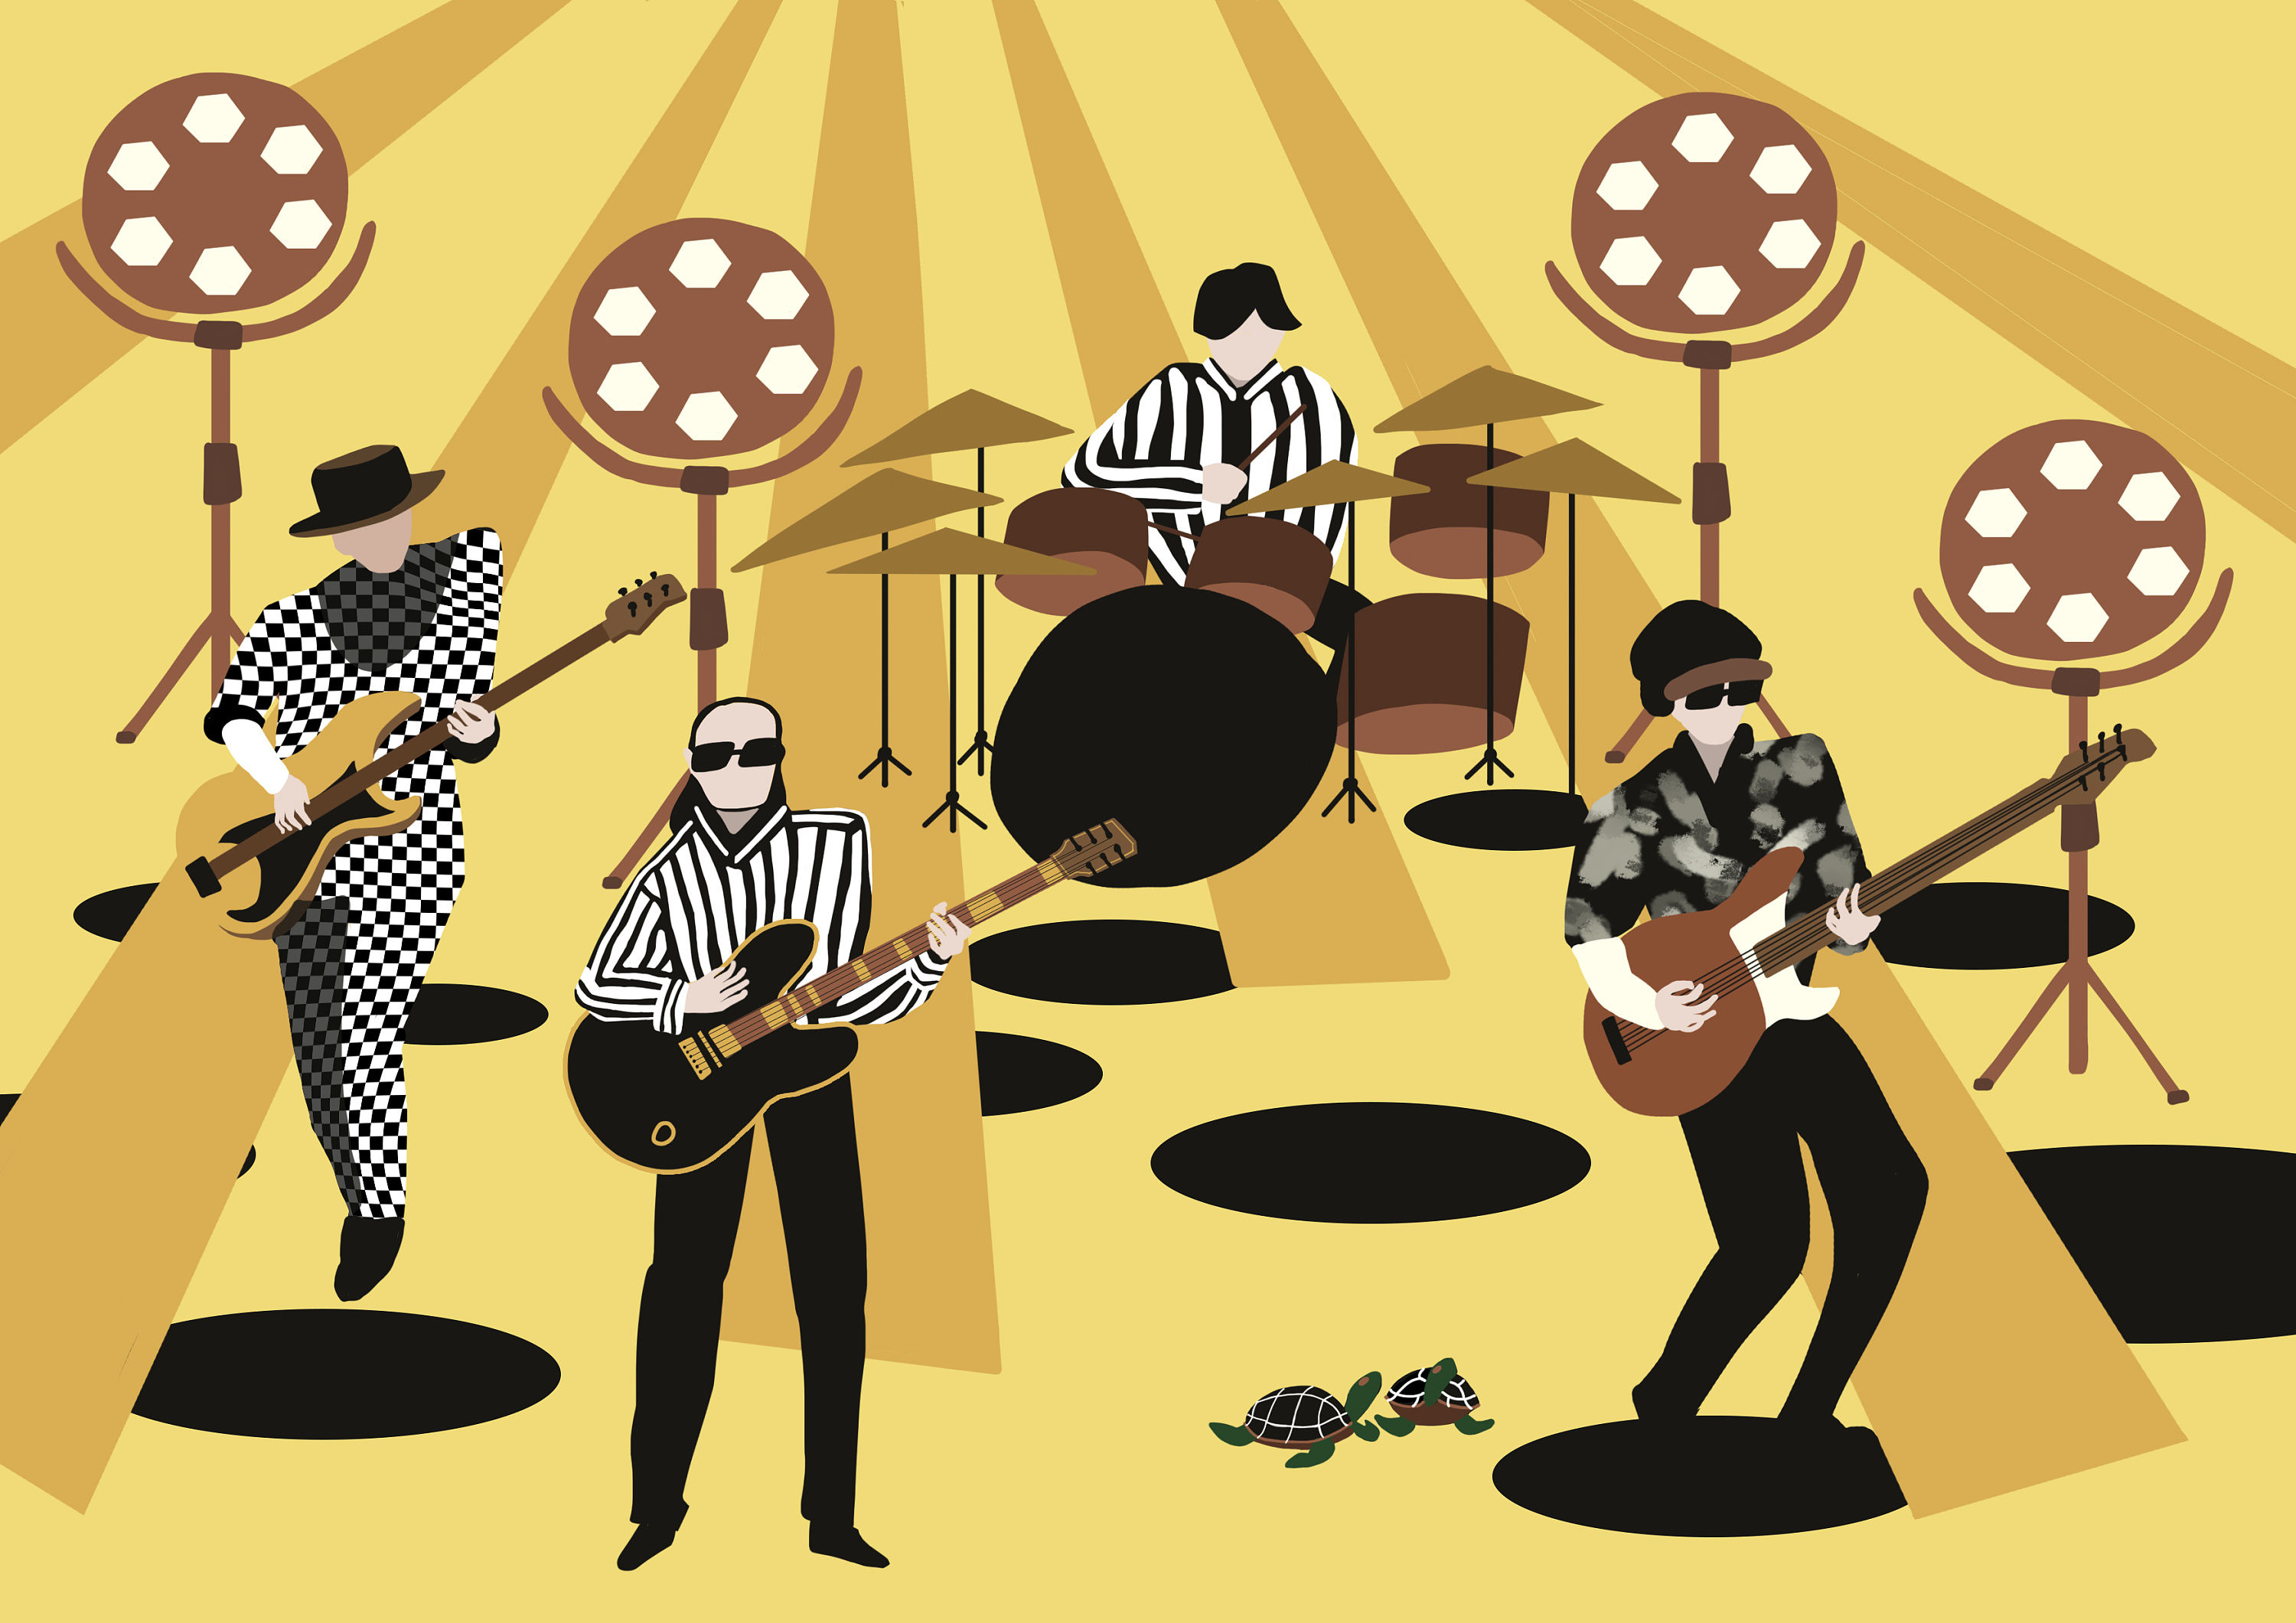 小可爱乐队演奏场景素材插画下载Little Cute Band – Vector Illustration-设计石代